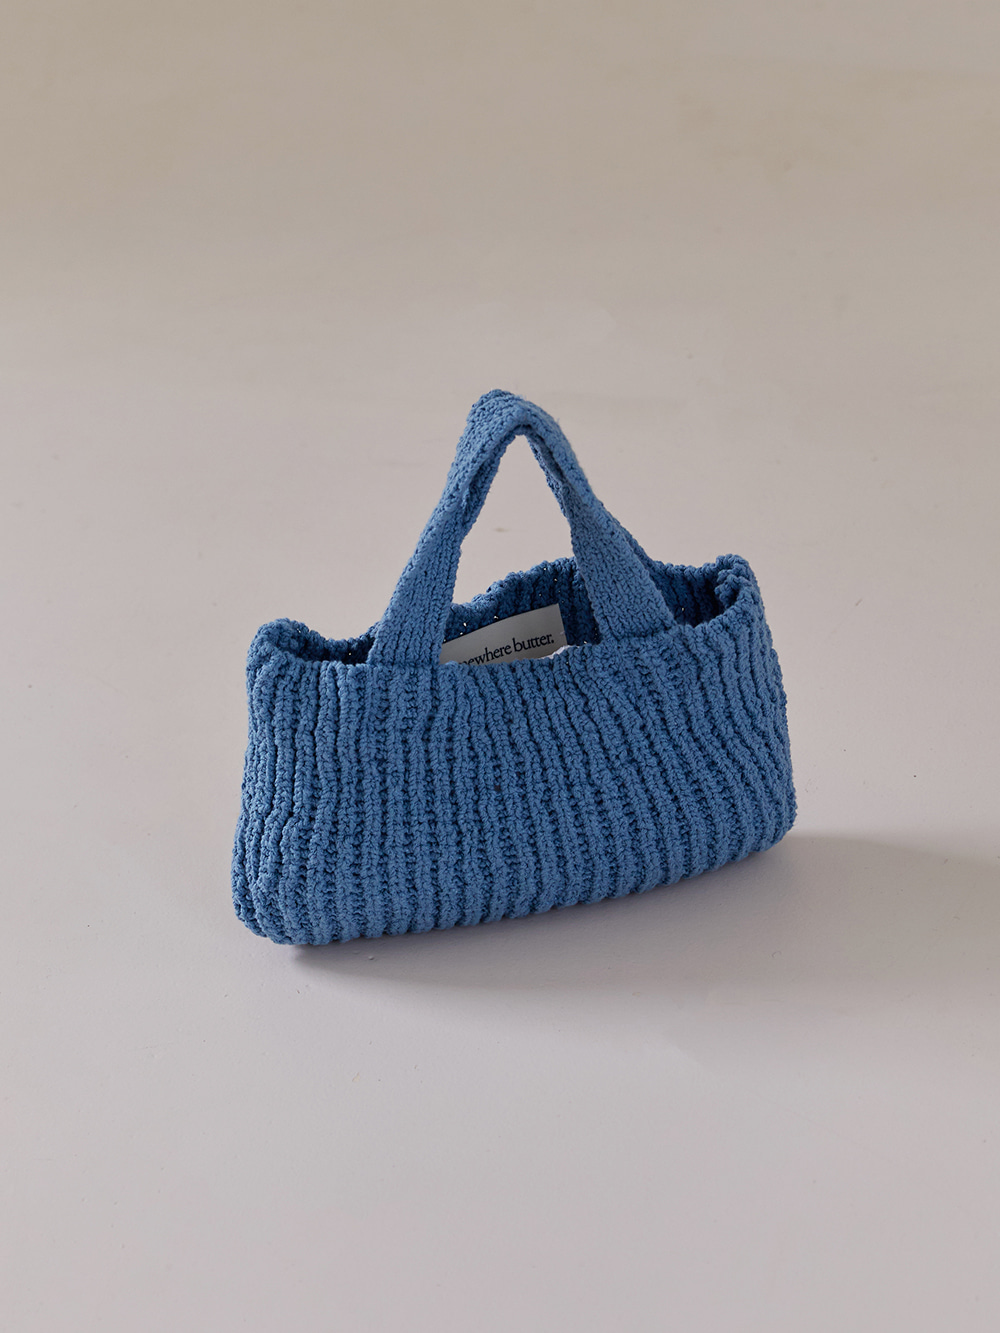 grandma handmade knit bag - vintage blue